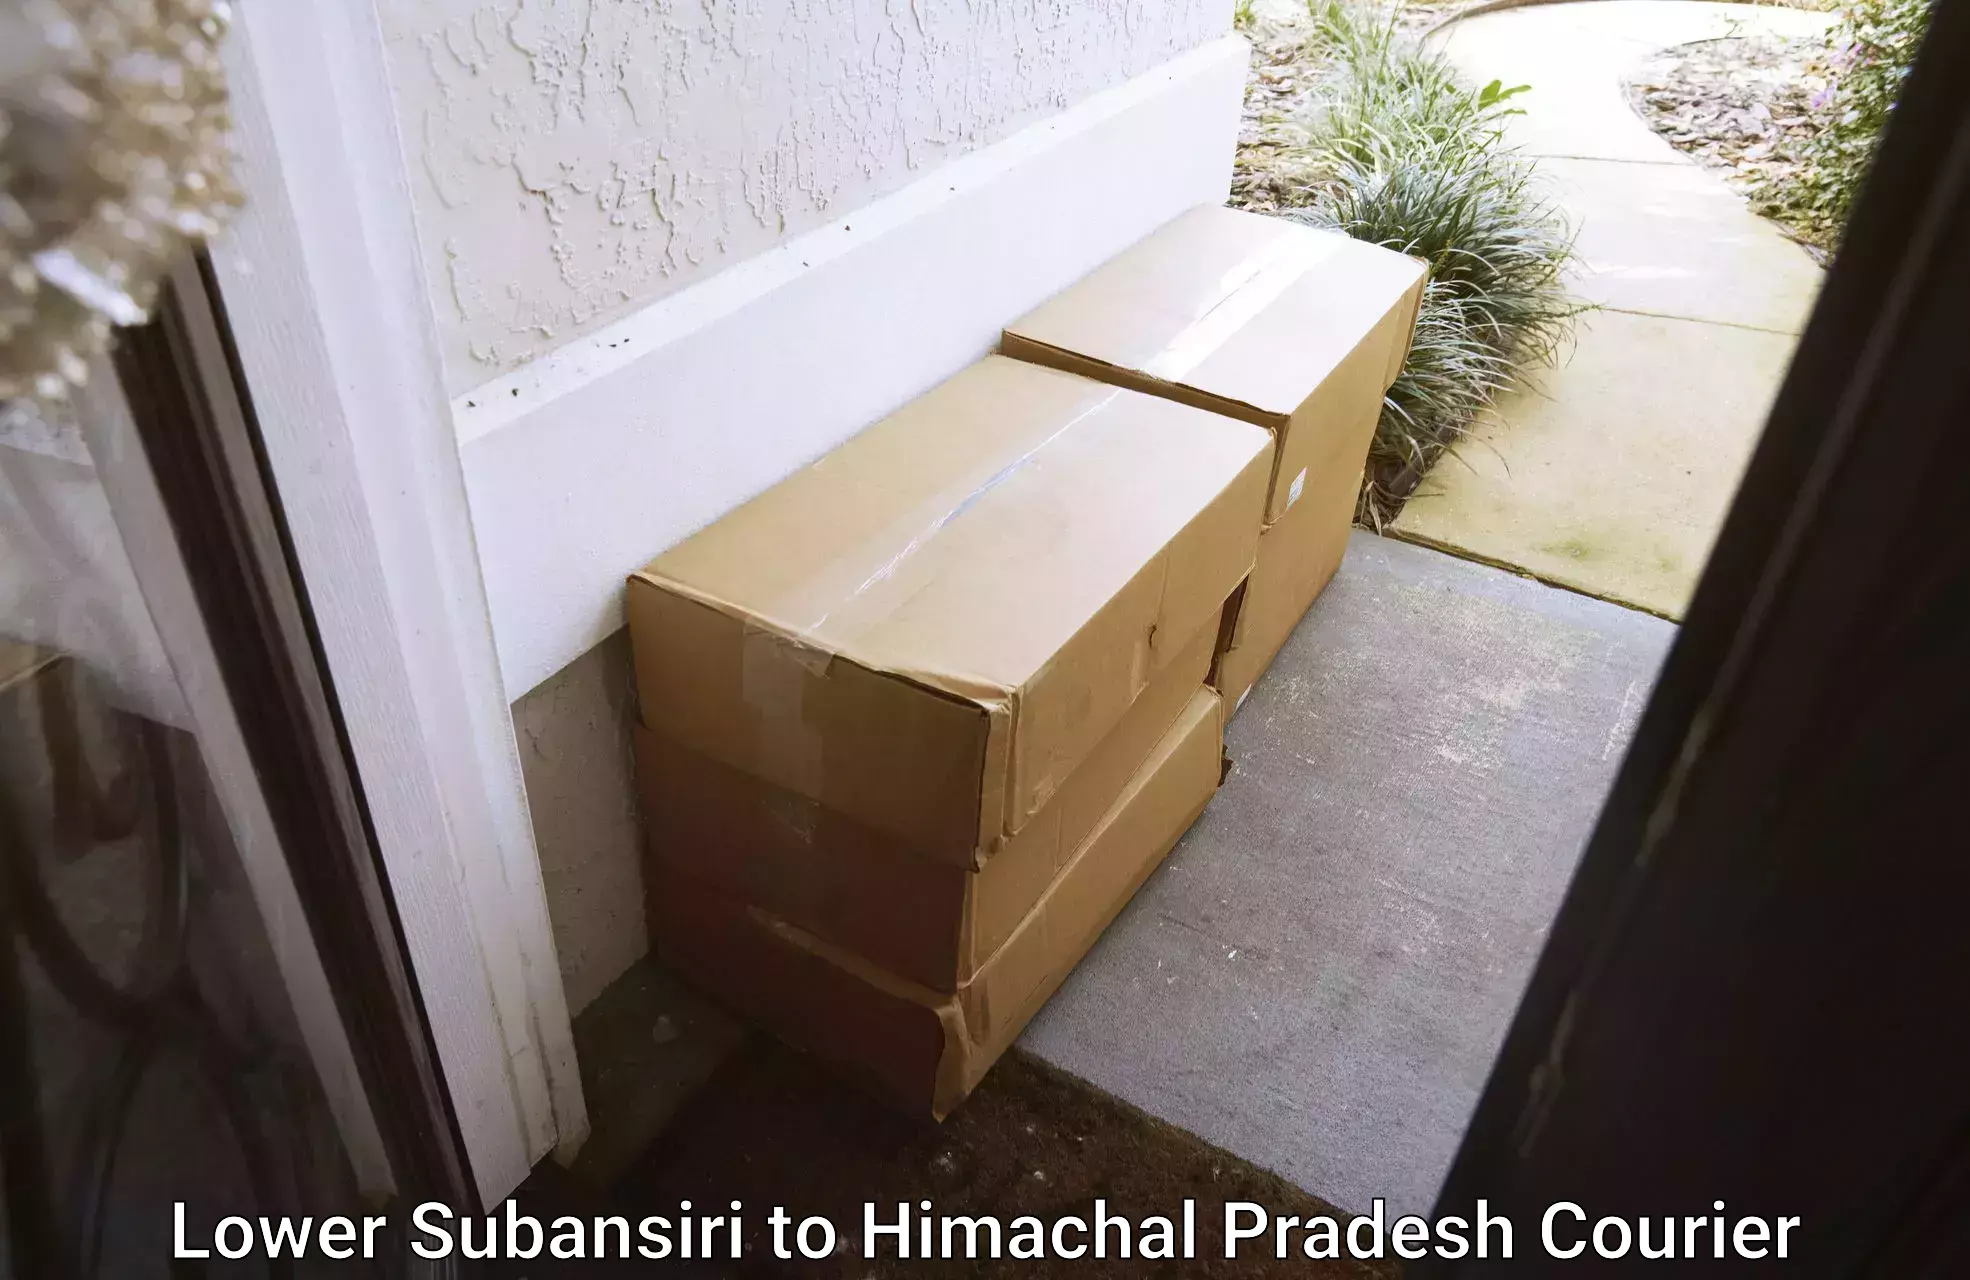 User-friendly courier app Lower Subansiri to Himachal Pradesh